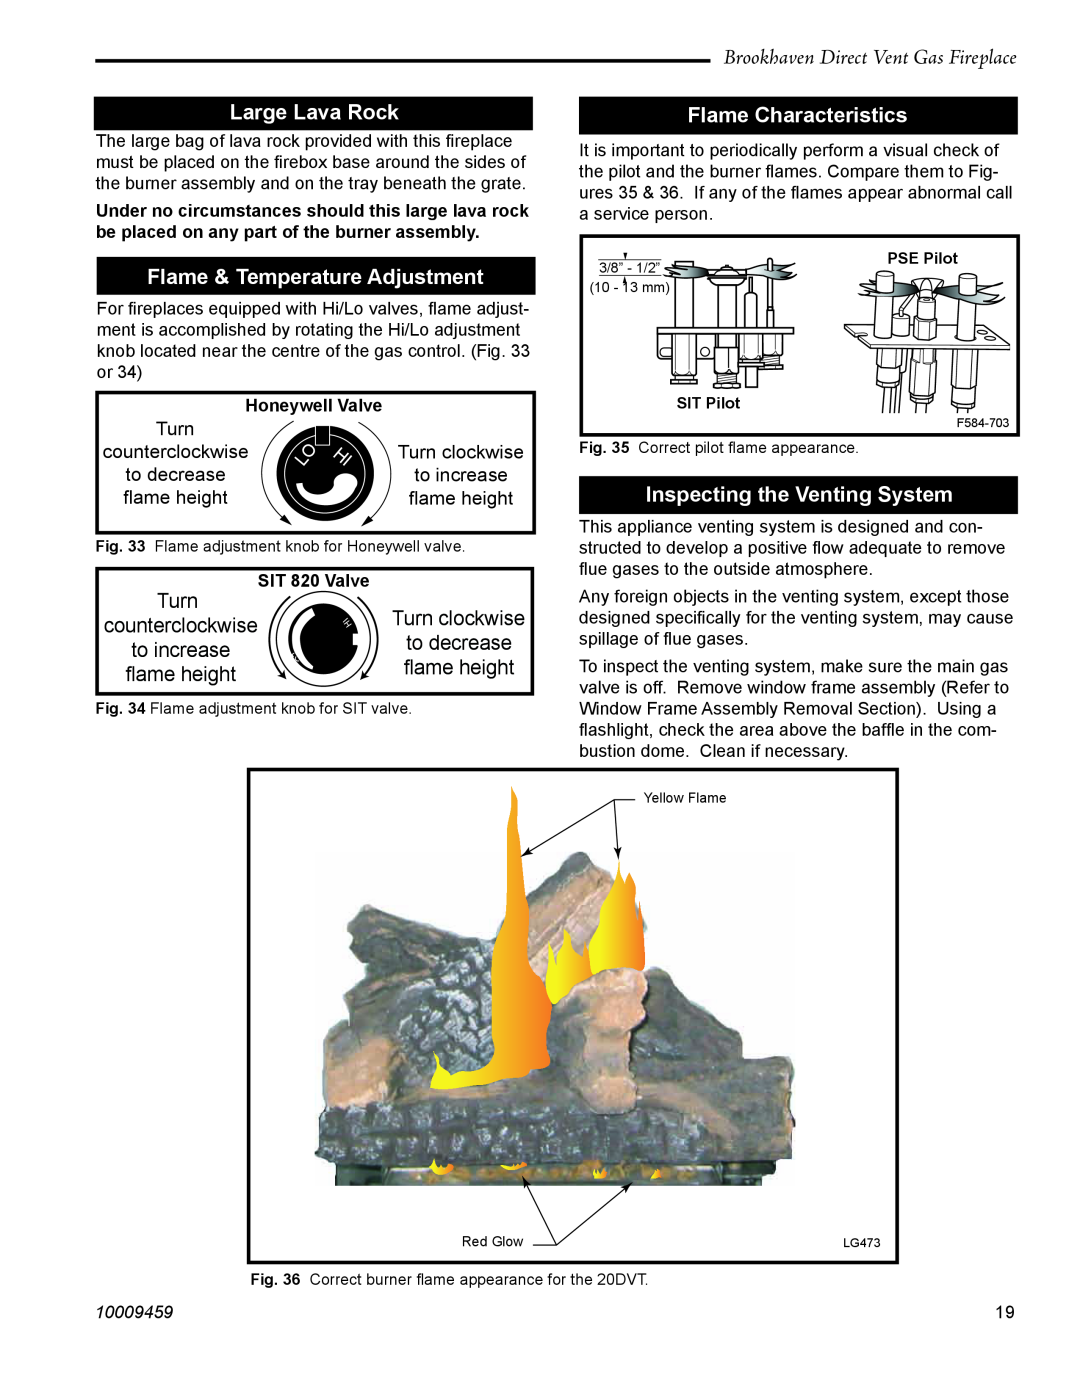 Vermont Casting 20DVT Large Lava Rock, Flame & Temperature Adjustment, Flame Characteristics, counterclockwise, 10009459 